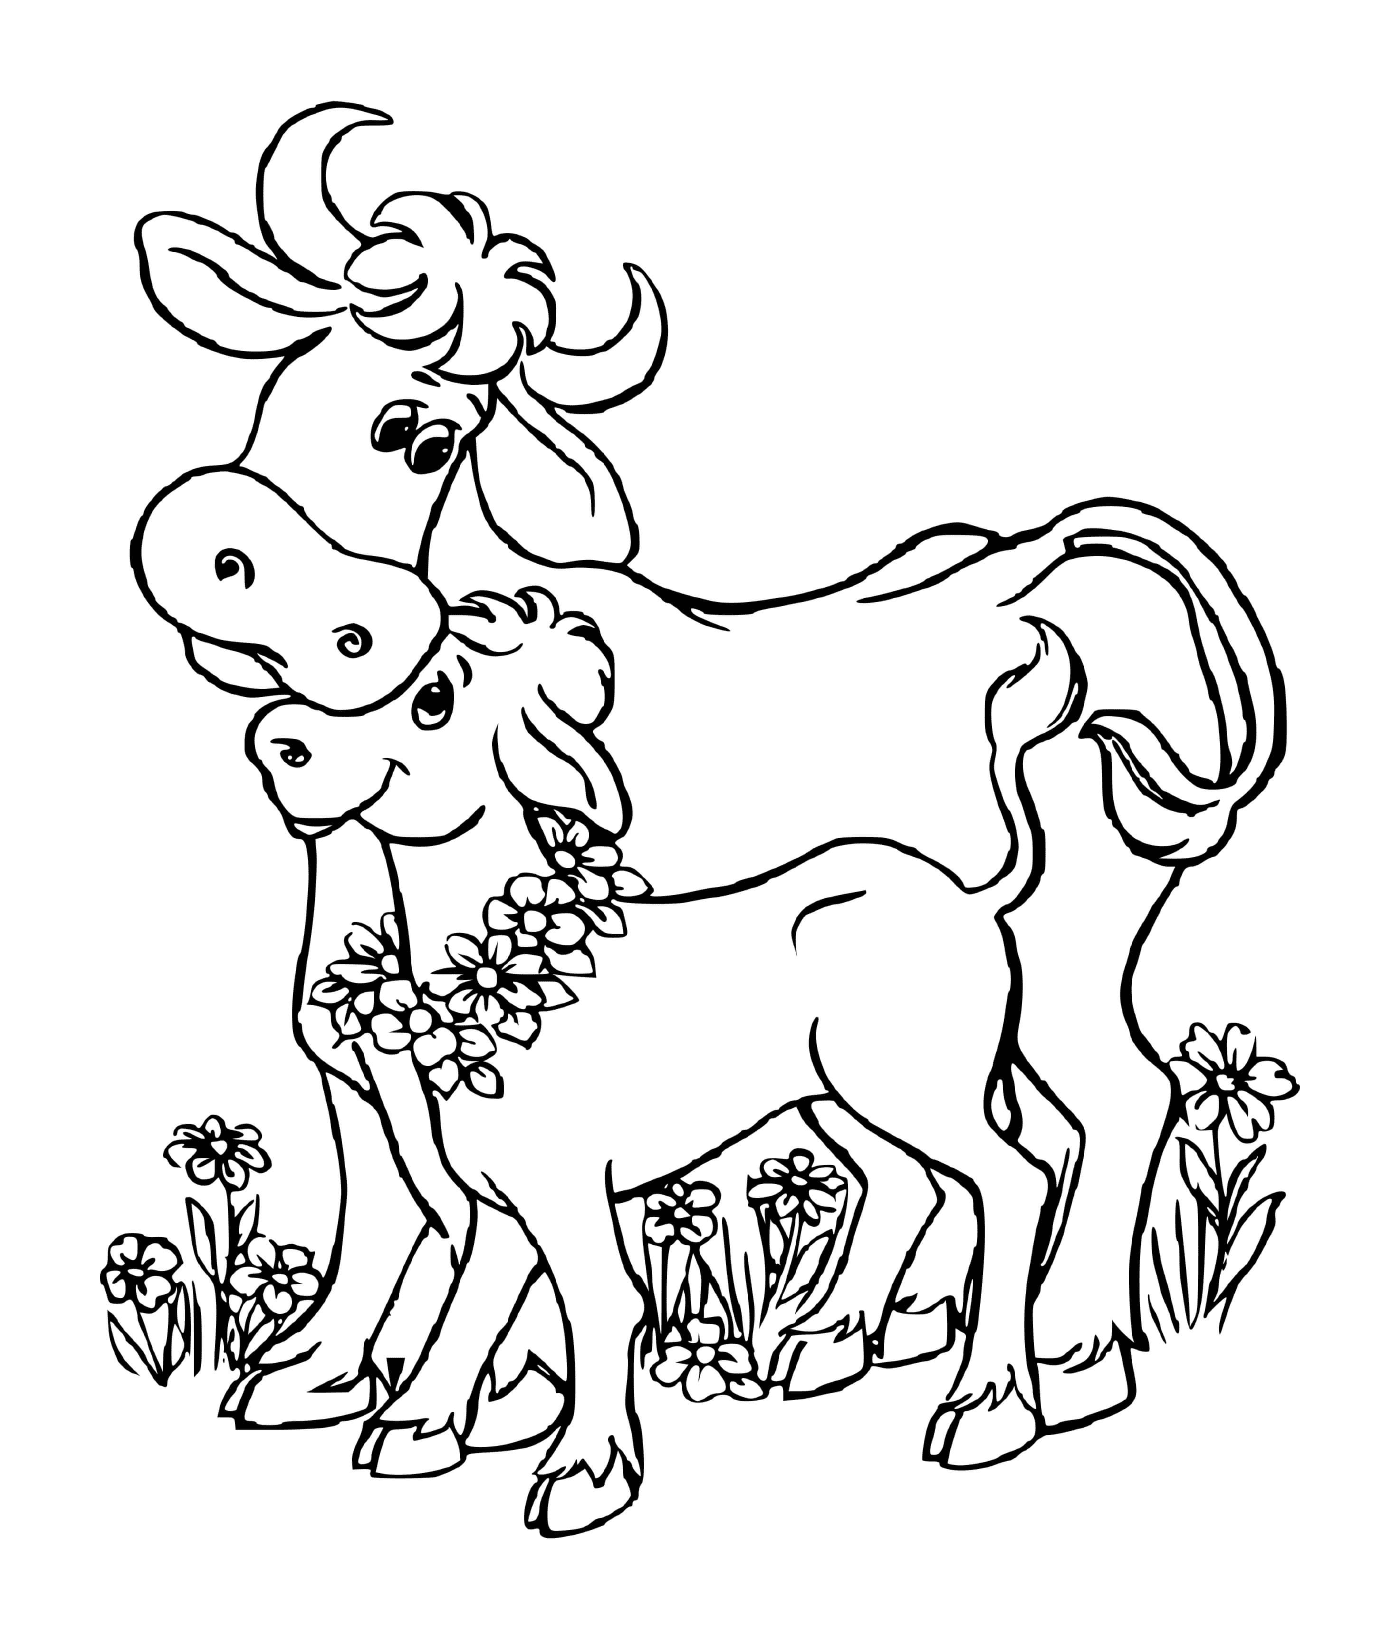  Мать-корова со своим маленьким теленком 